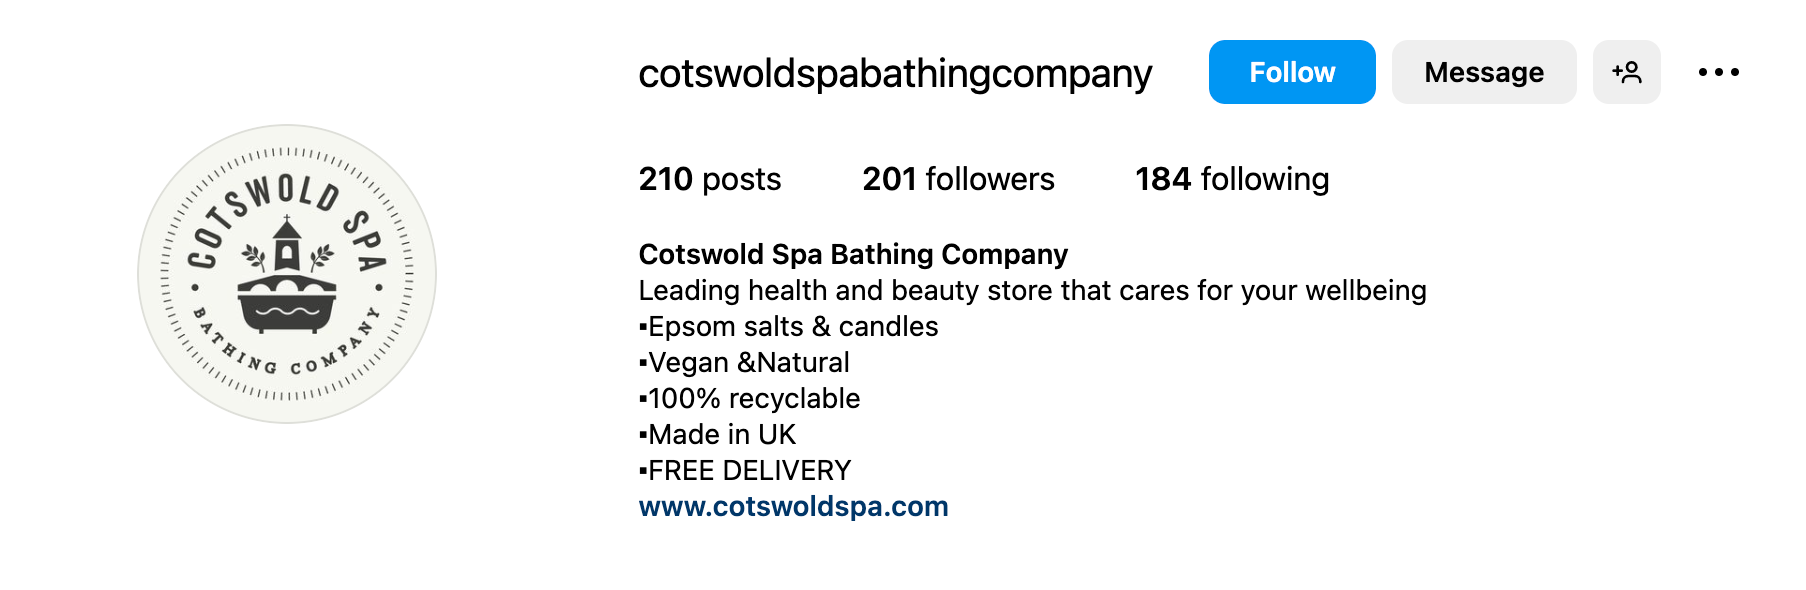 Instagram bio ideas - Cotswold Spa Bathing Company